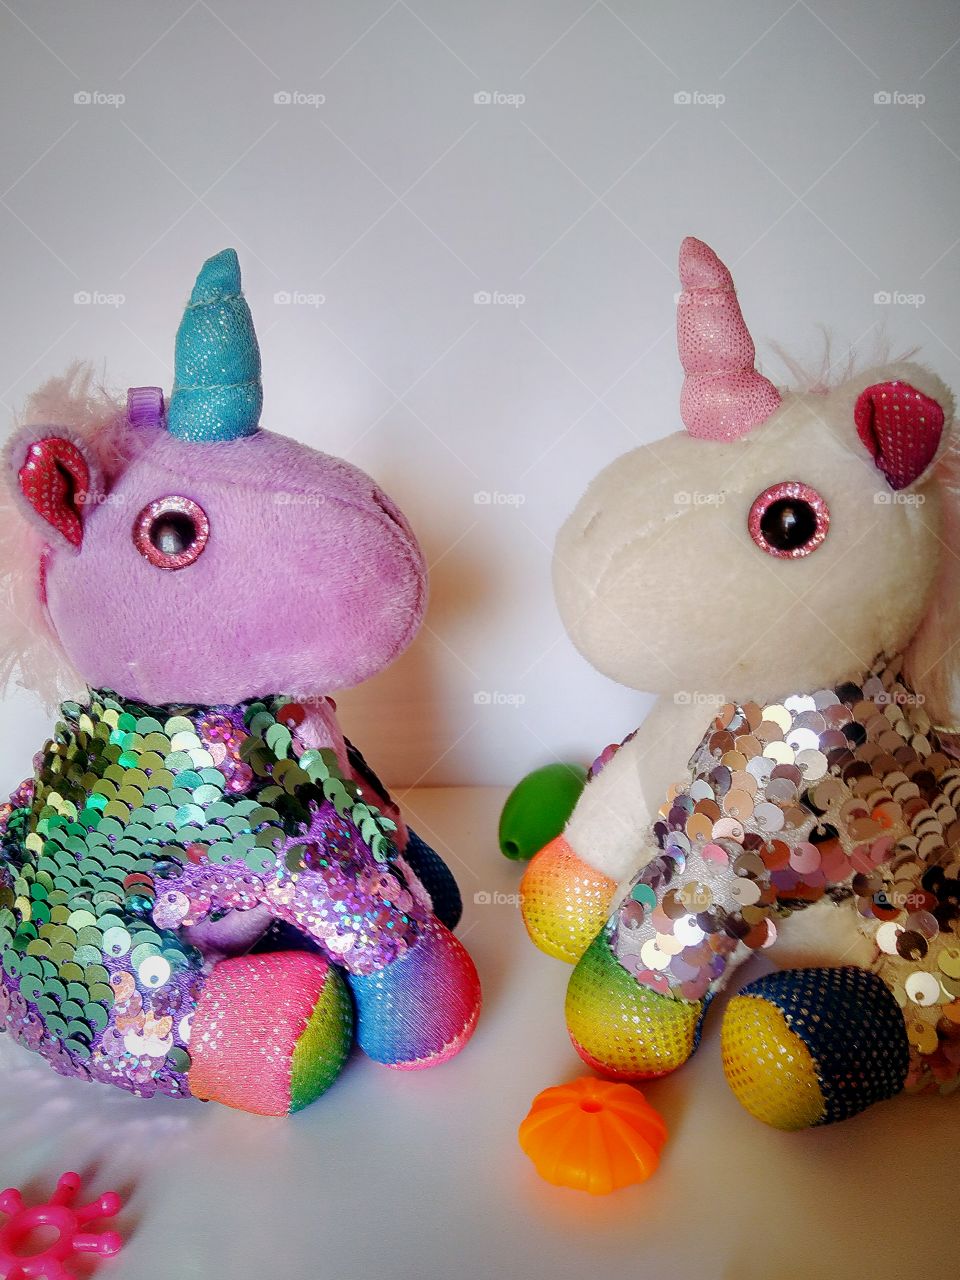 Kids week:Rainbows & Unicorns!(Creators Award) by foaр missions